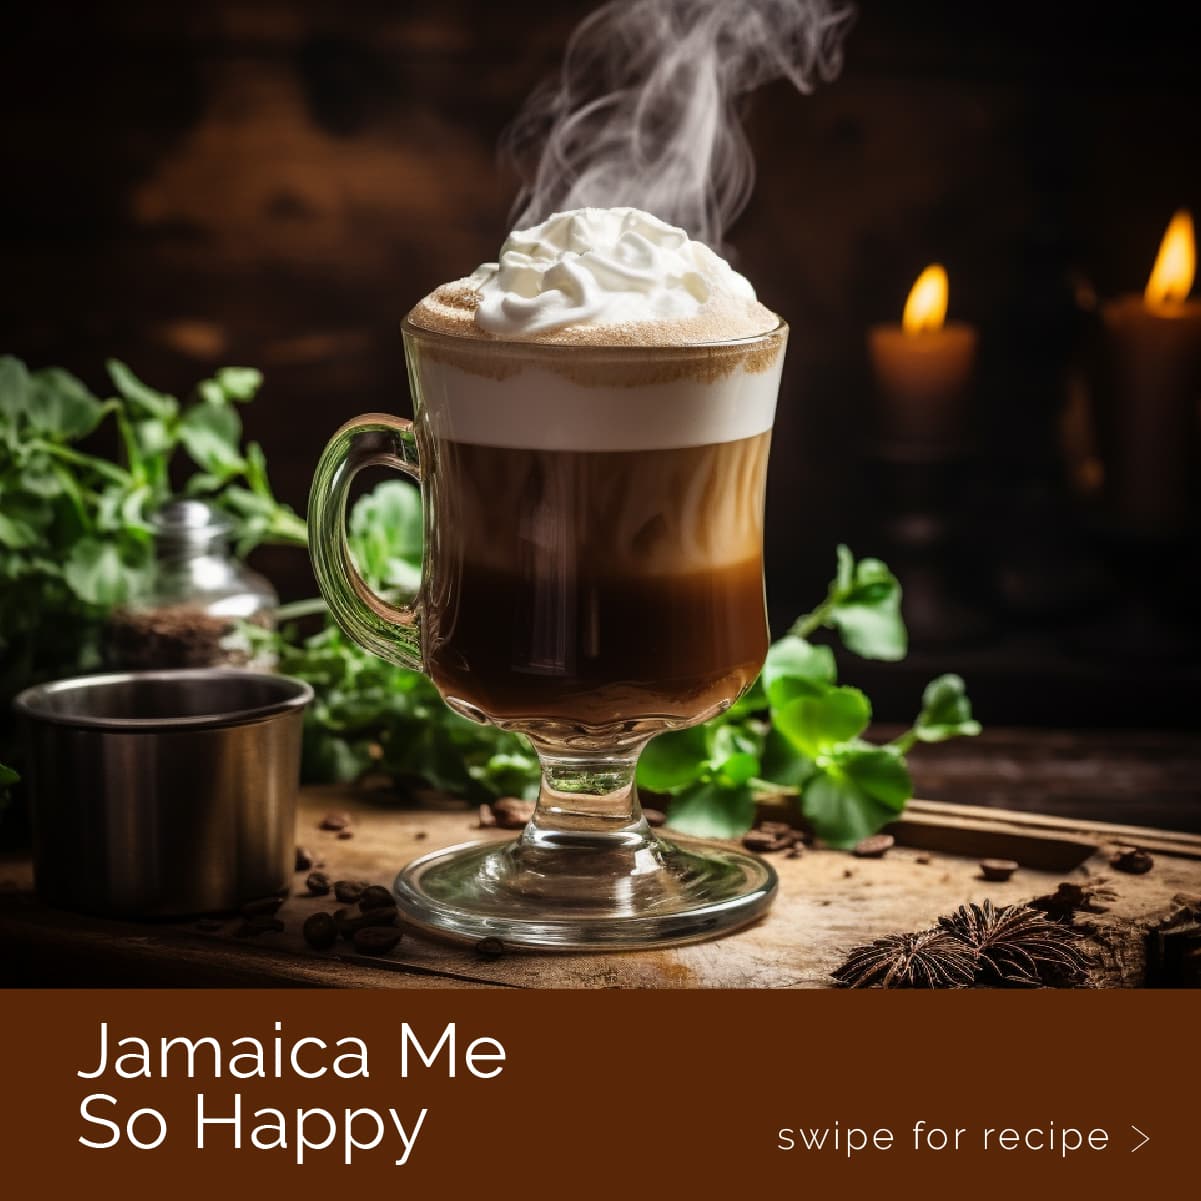 A Jamaica-me-happy cocktail